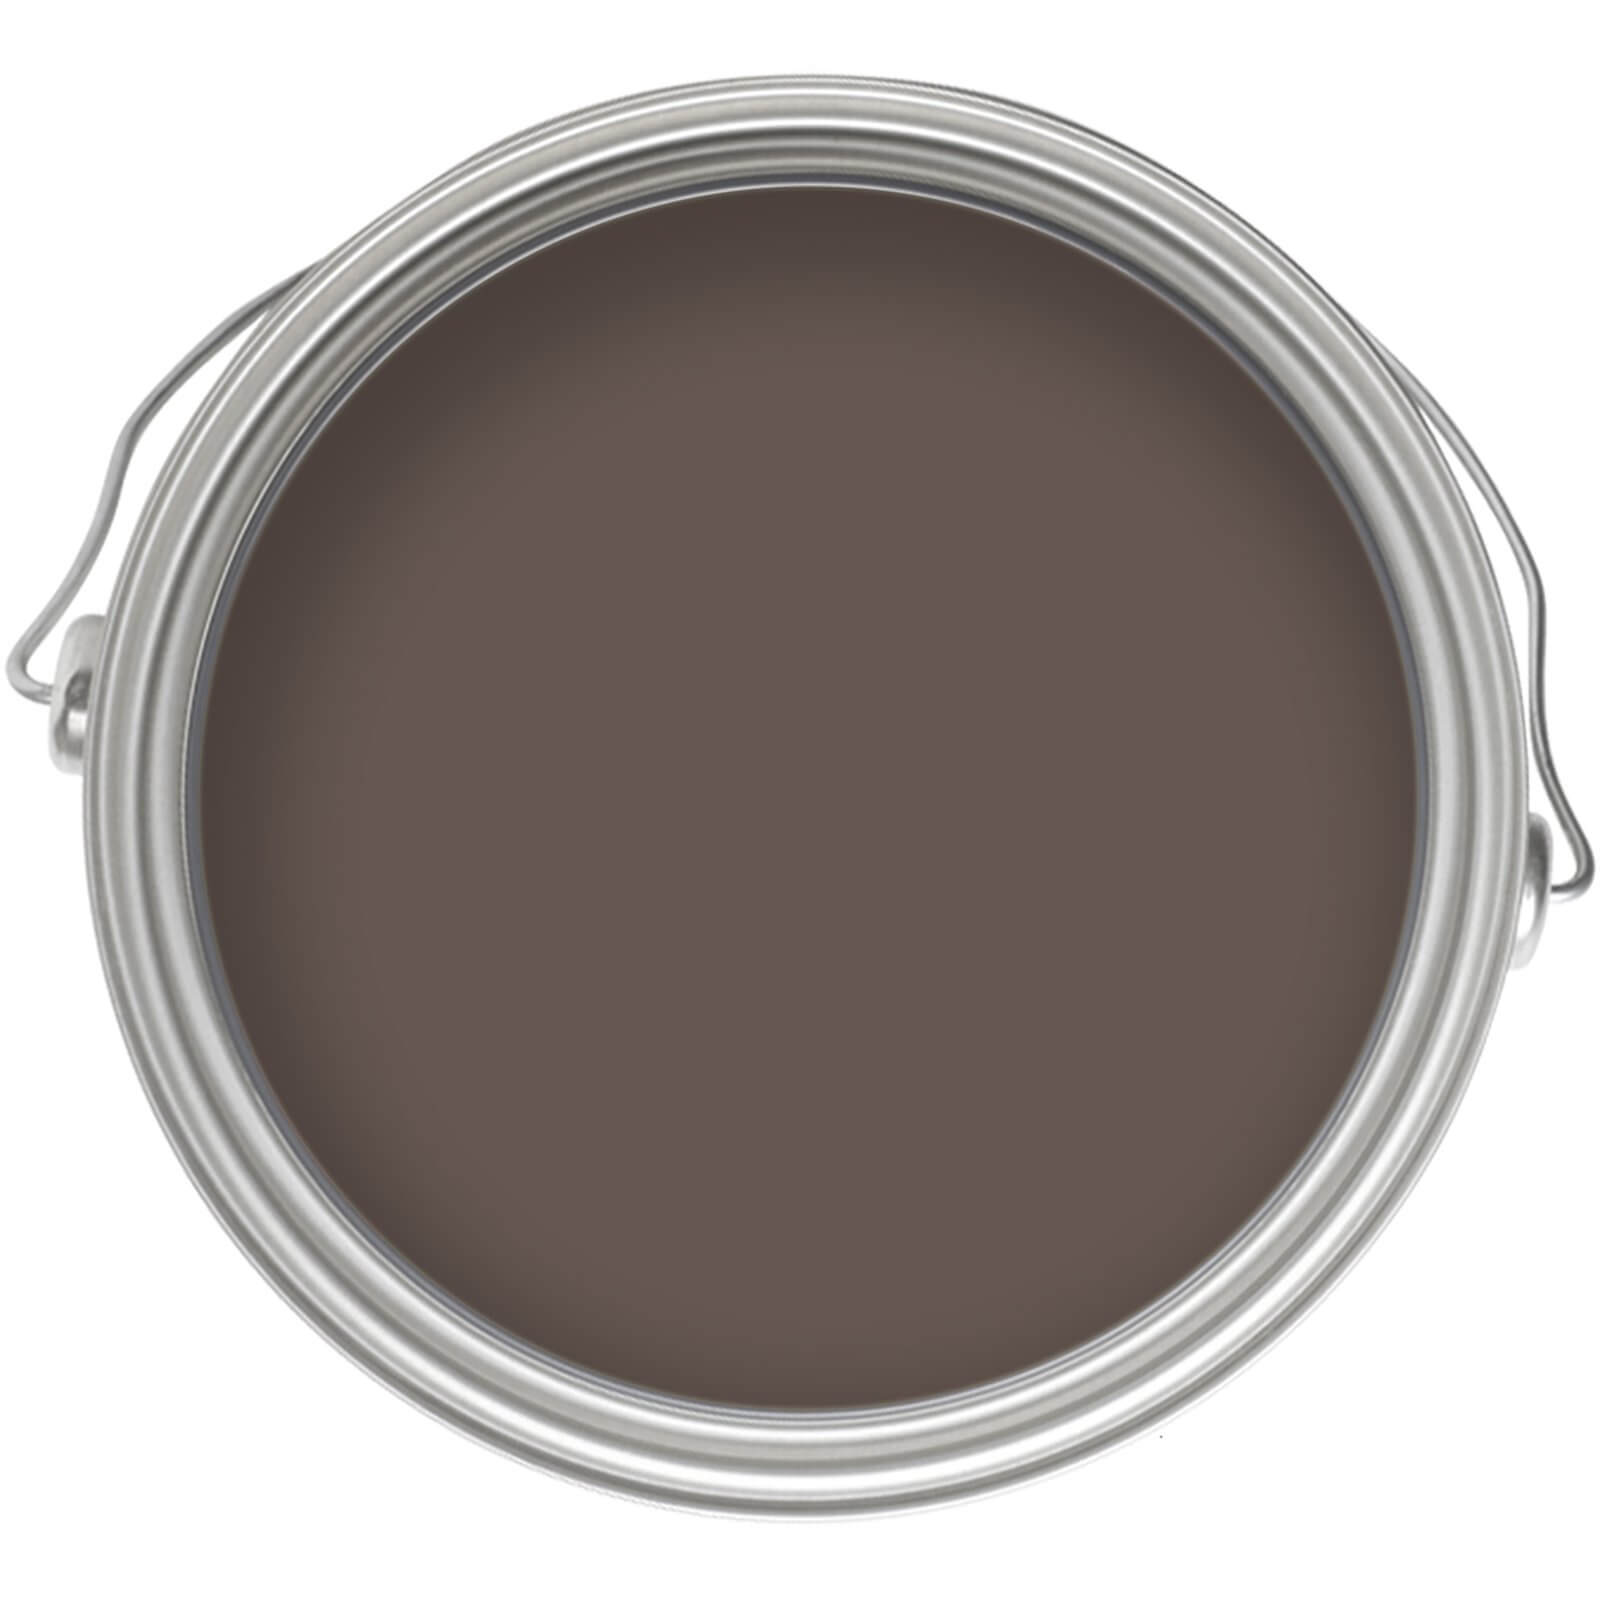 Homebase Interior Quick Dry Gloss Paint Warm Earth - 750ml